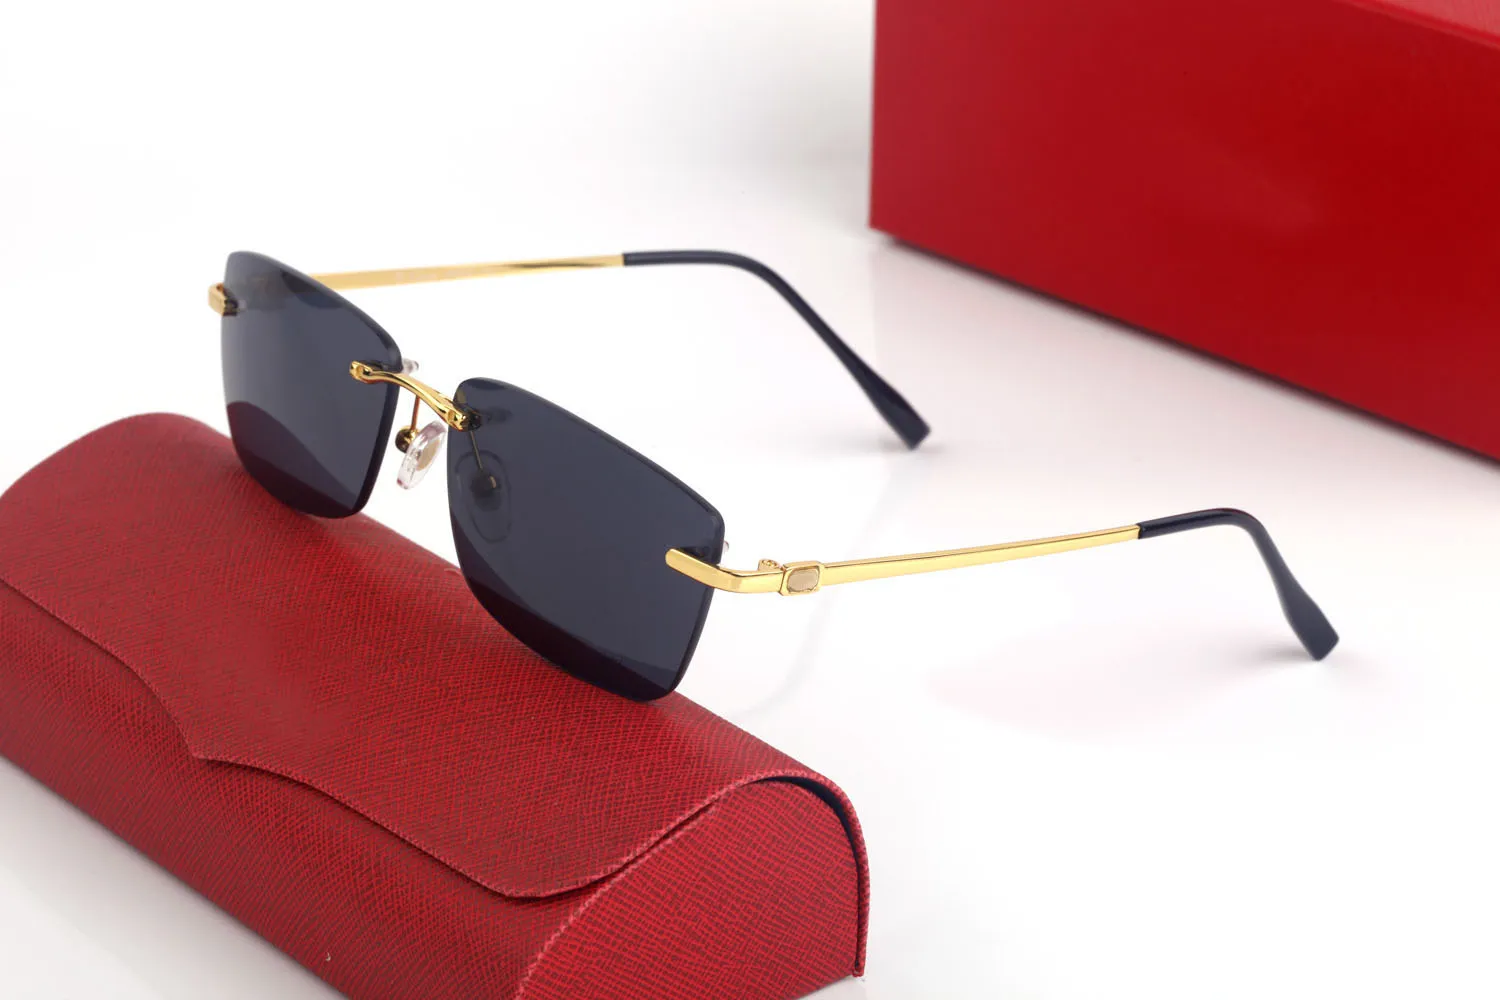 rectangle sunglasses Eyeglasses frames temples with Metal Frameless Rimless rectangular shape for men woman eyewear accessories gl207t